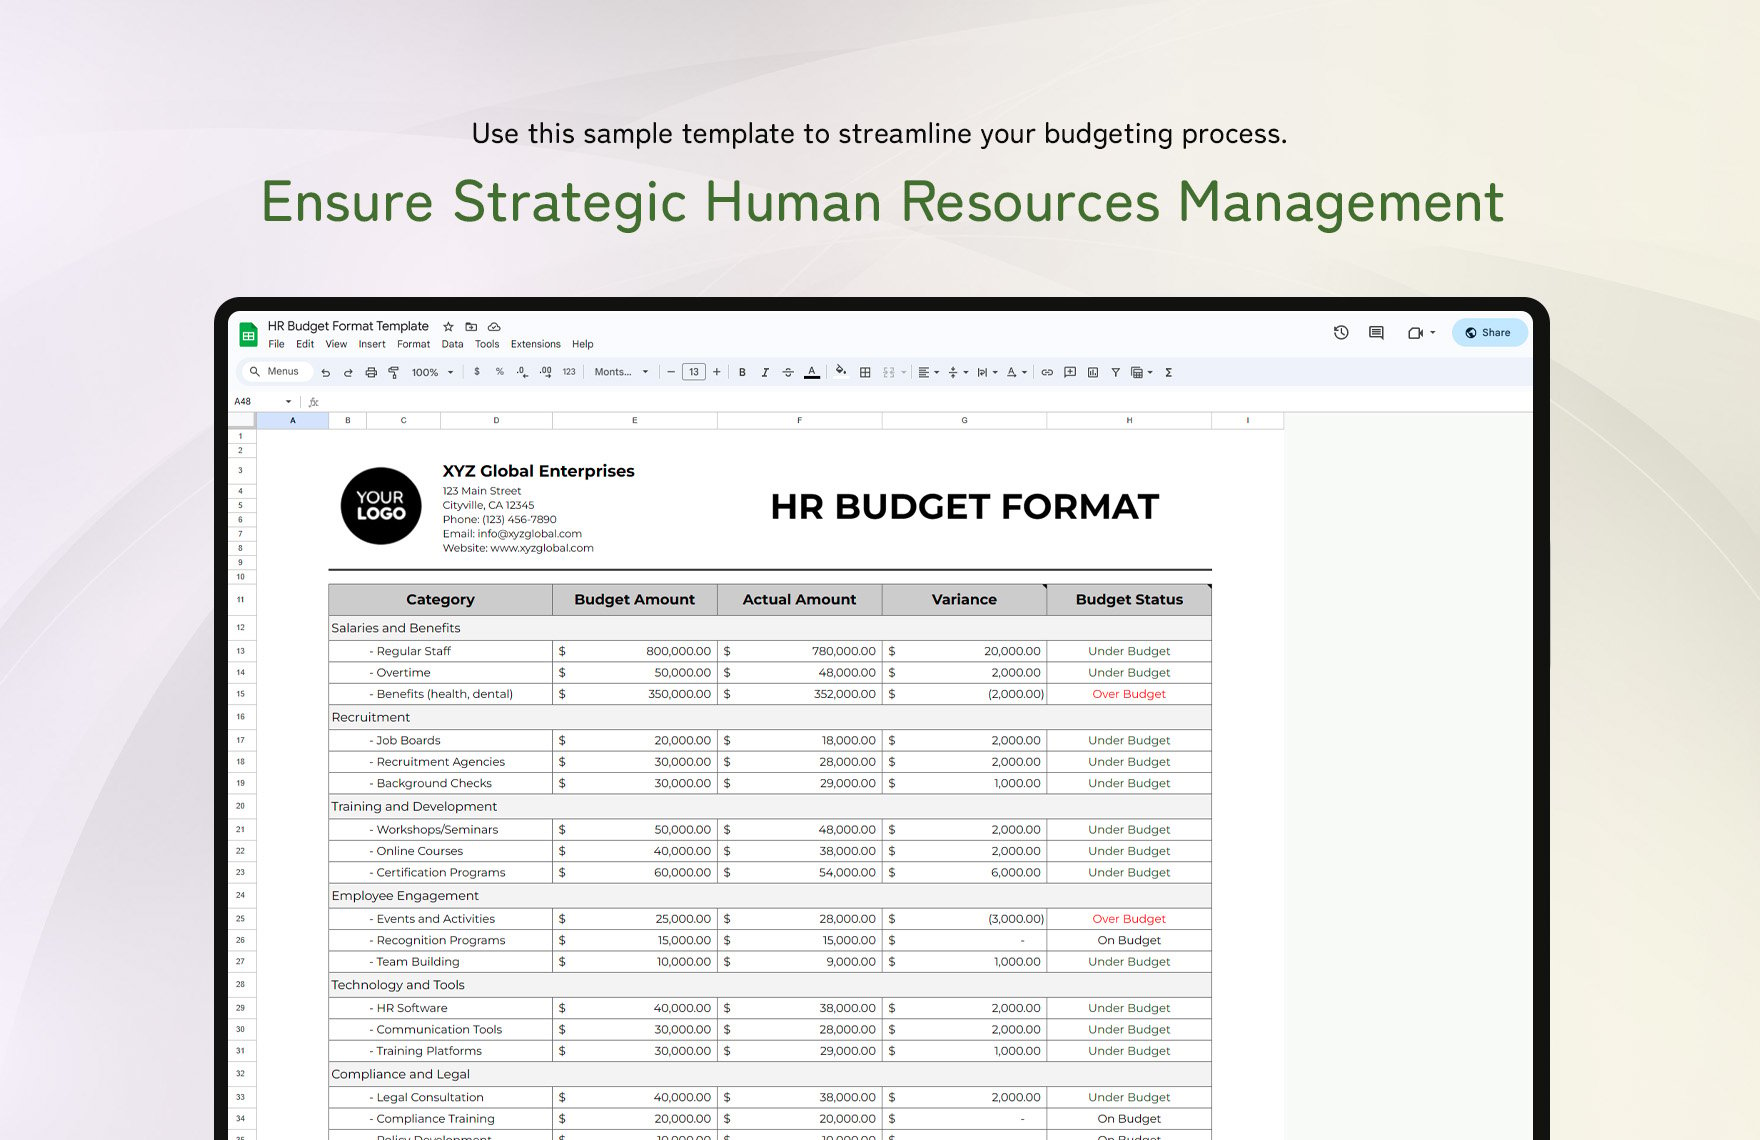 HR Budget Format Template